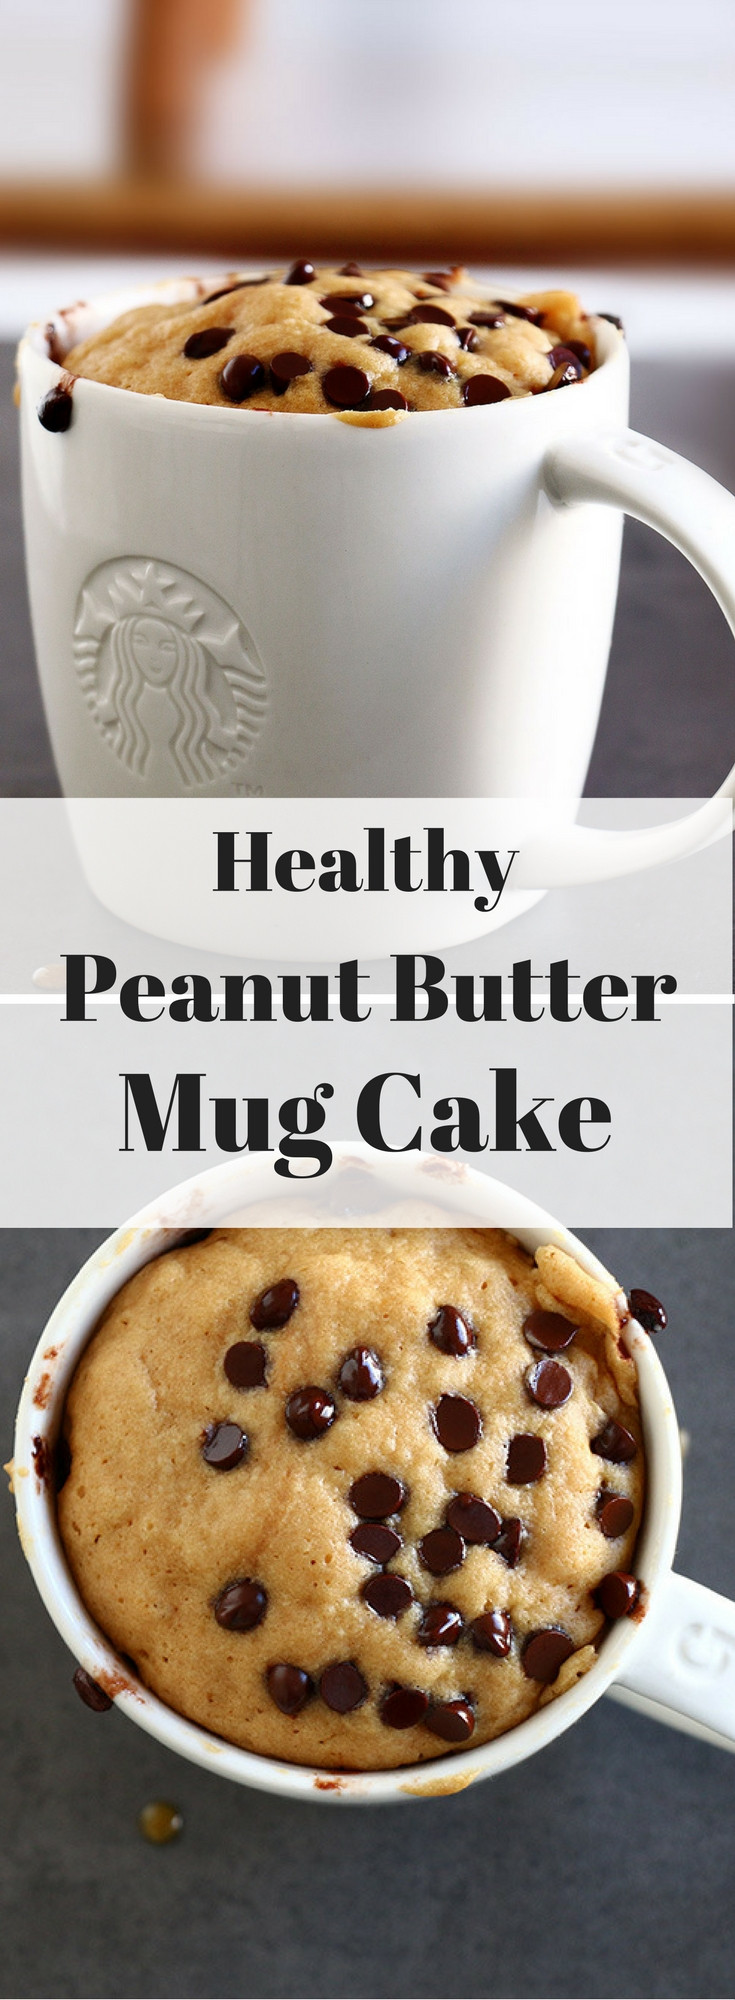 Mug Cake Healthy
 Healthy Peanut Butter Mug Cake Baking Ginger